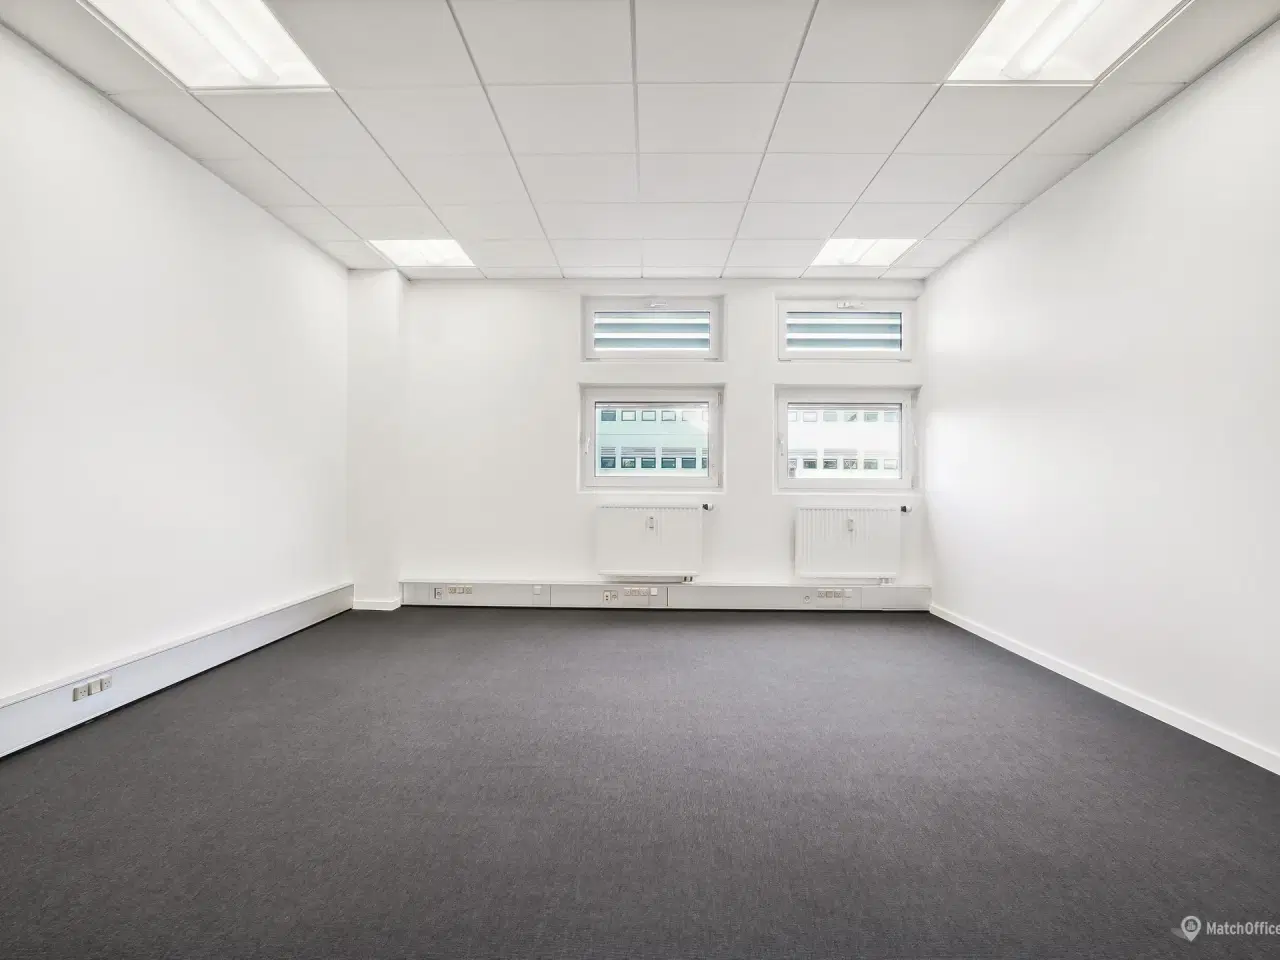 Billede 13 - Lyse og moderne kontorlokaler med rå kant